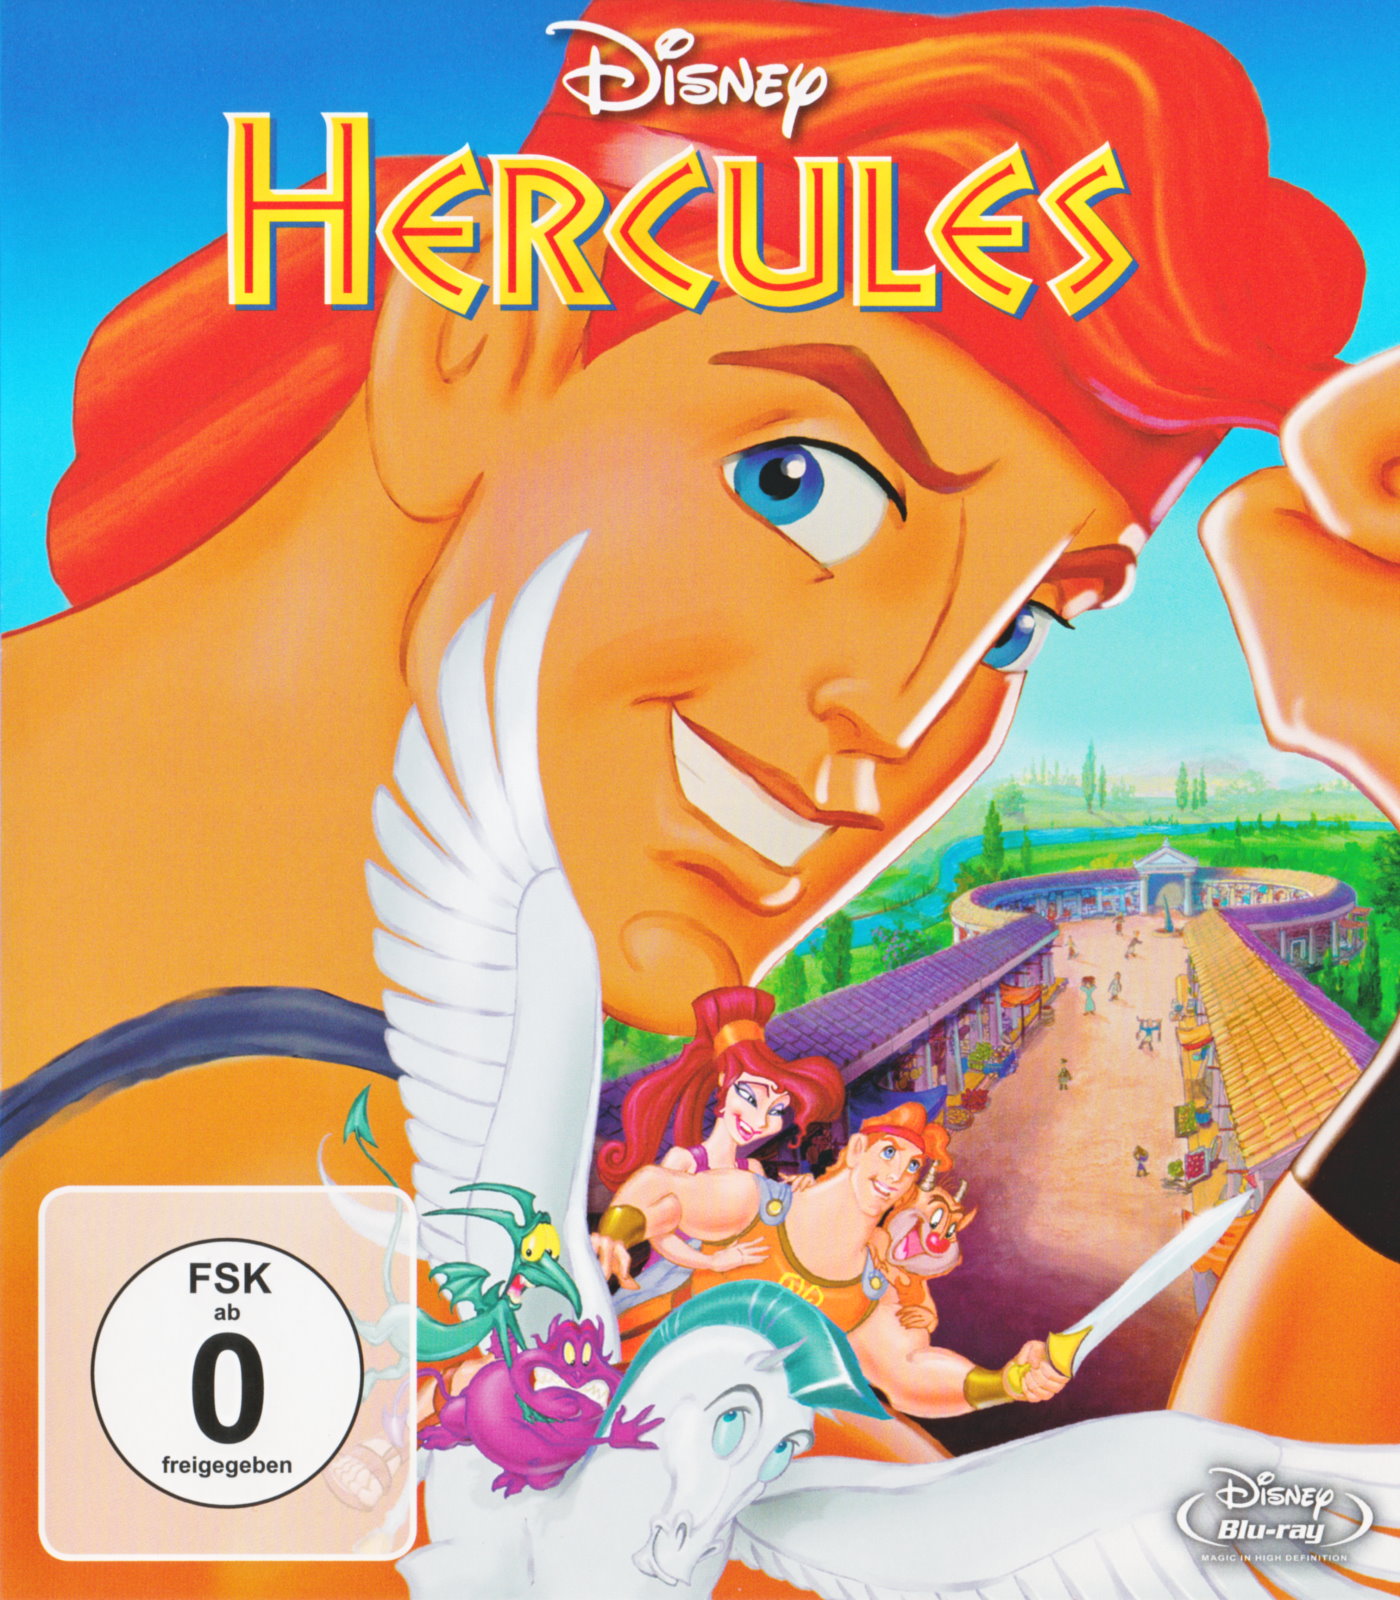 Cover - Hercules.jpg